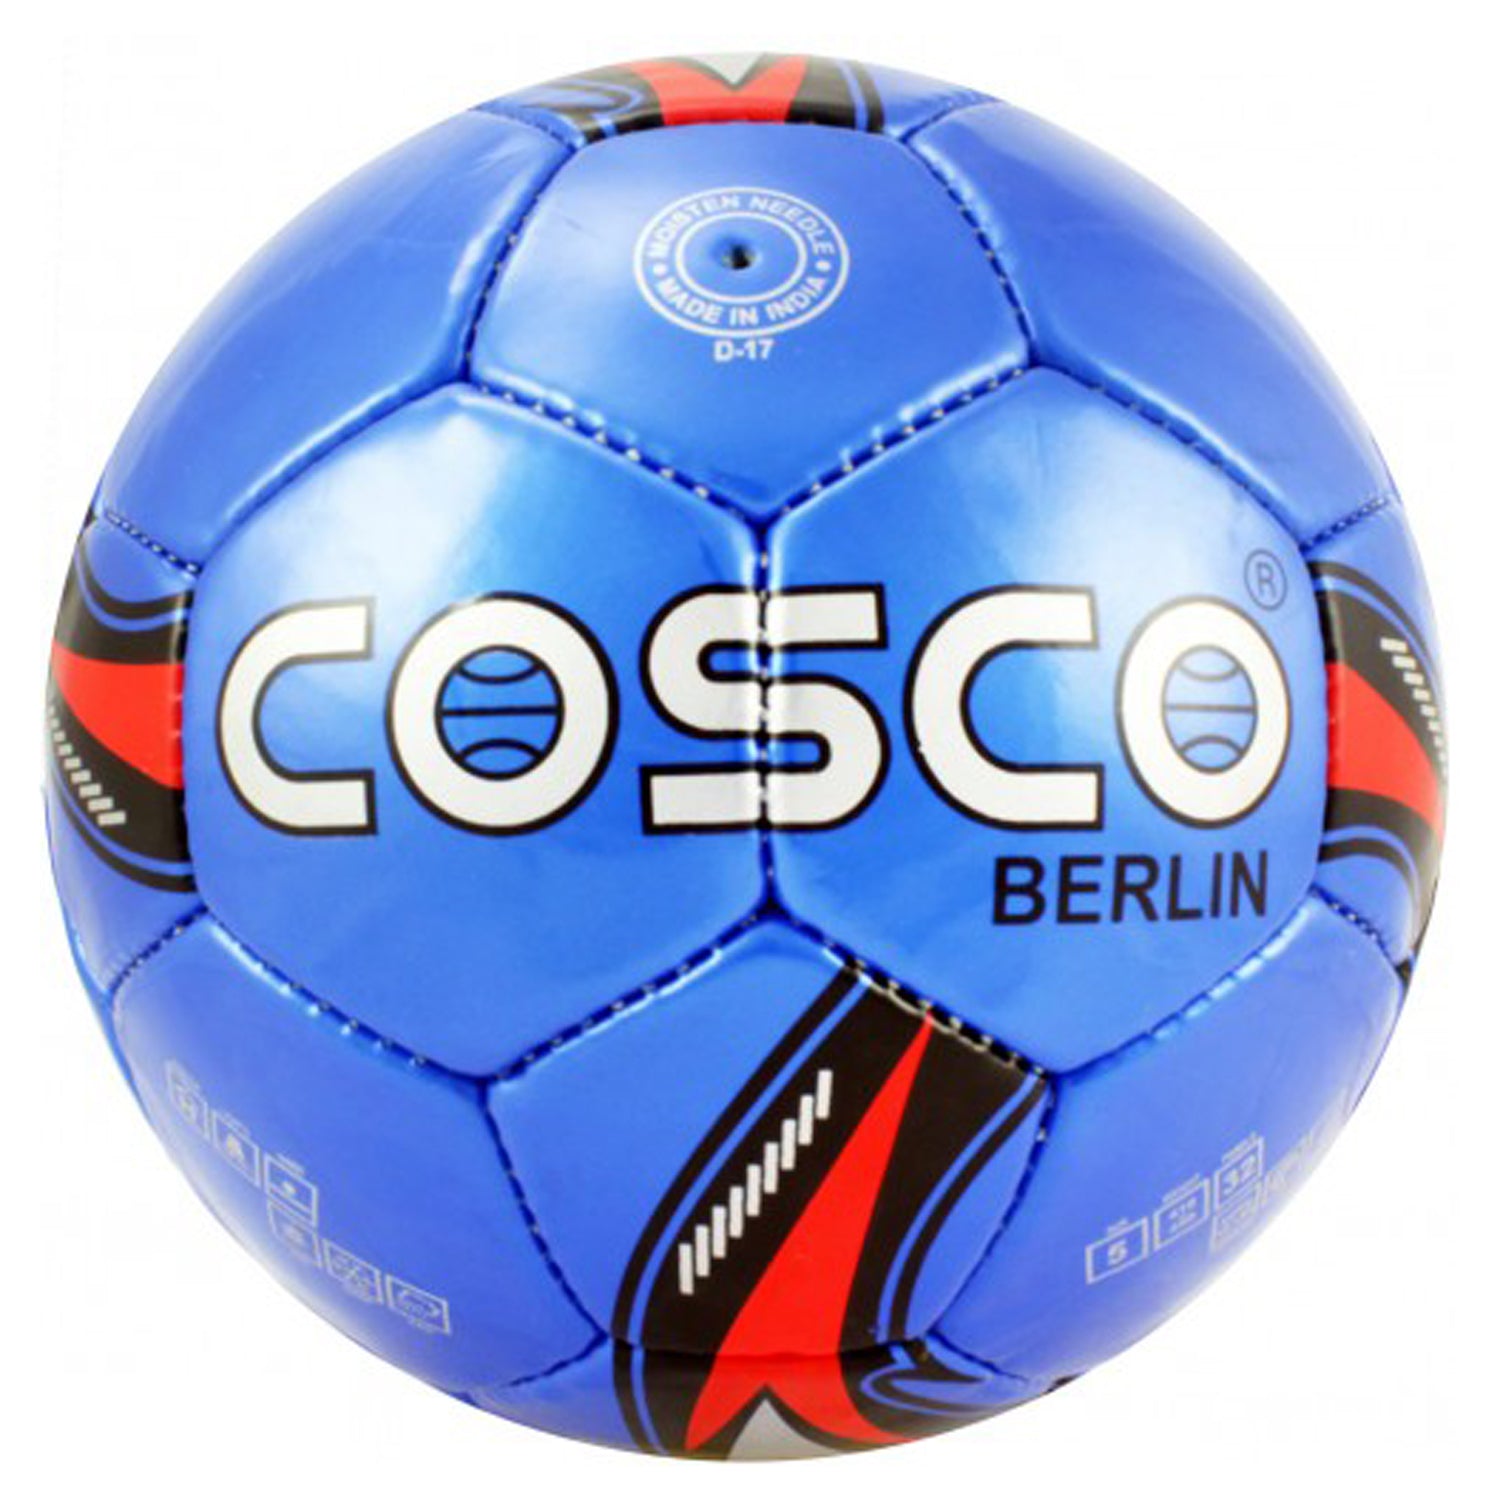 Cosco Berlin Football , Blue/Black/Red - Size 5 - Best Price online Prokicksports.com